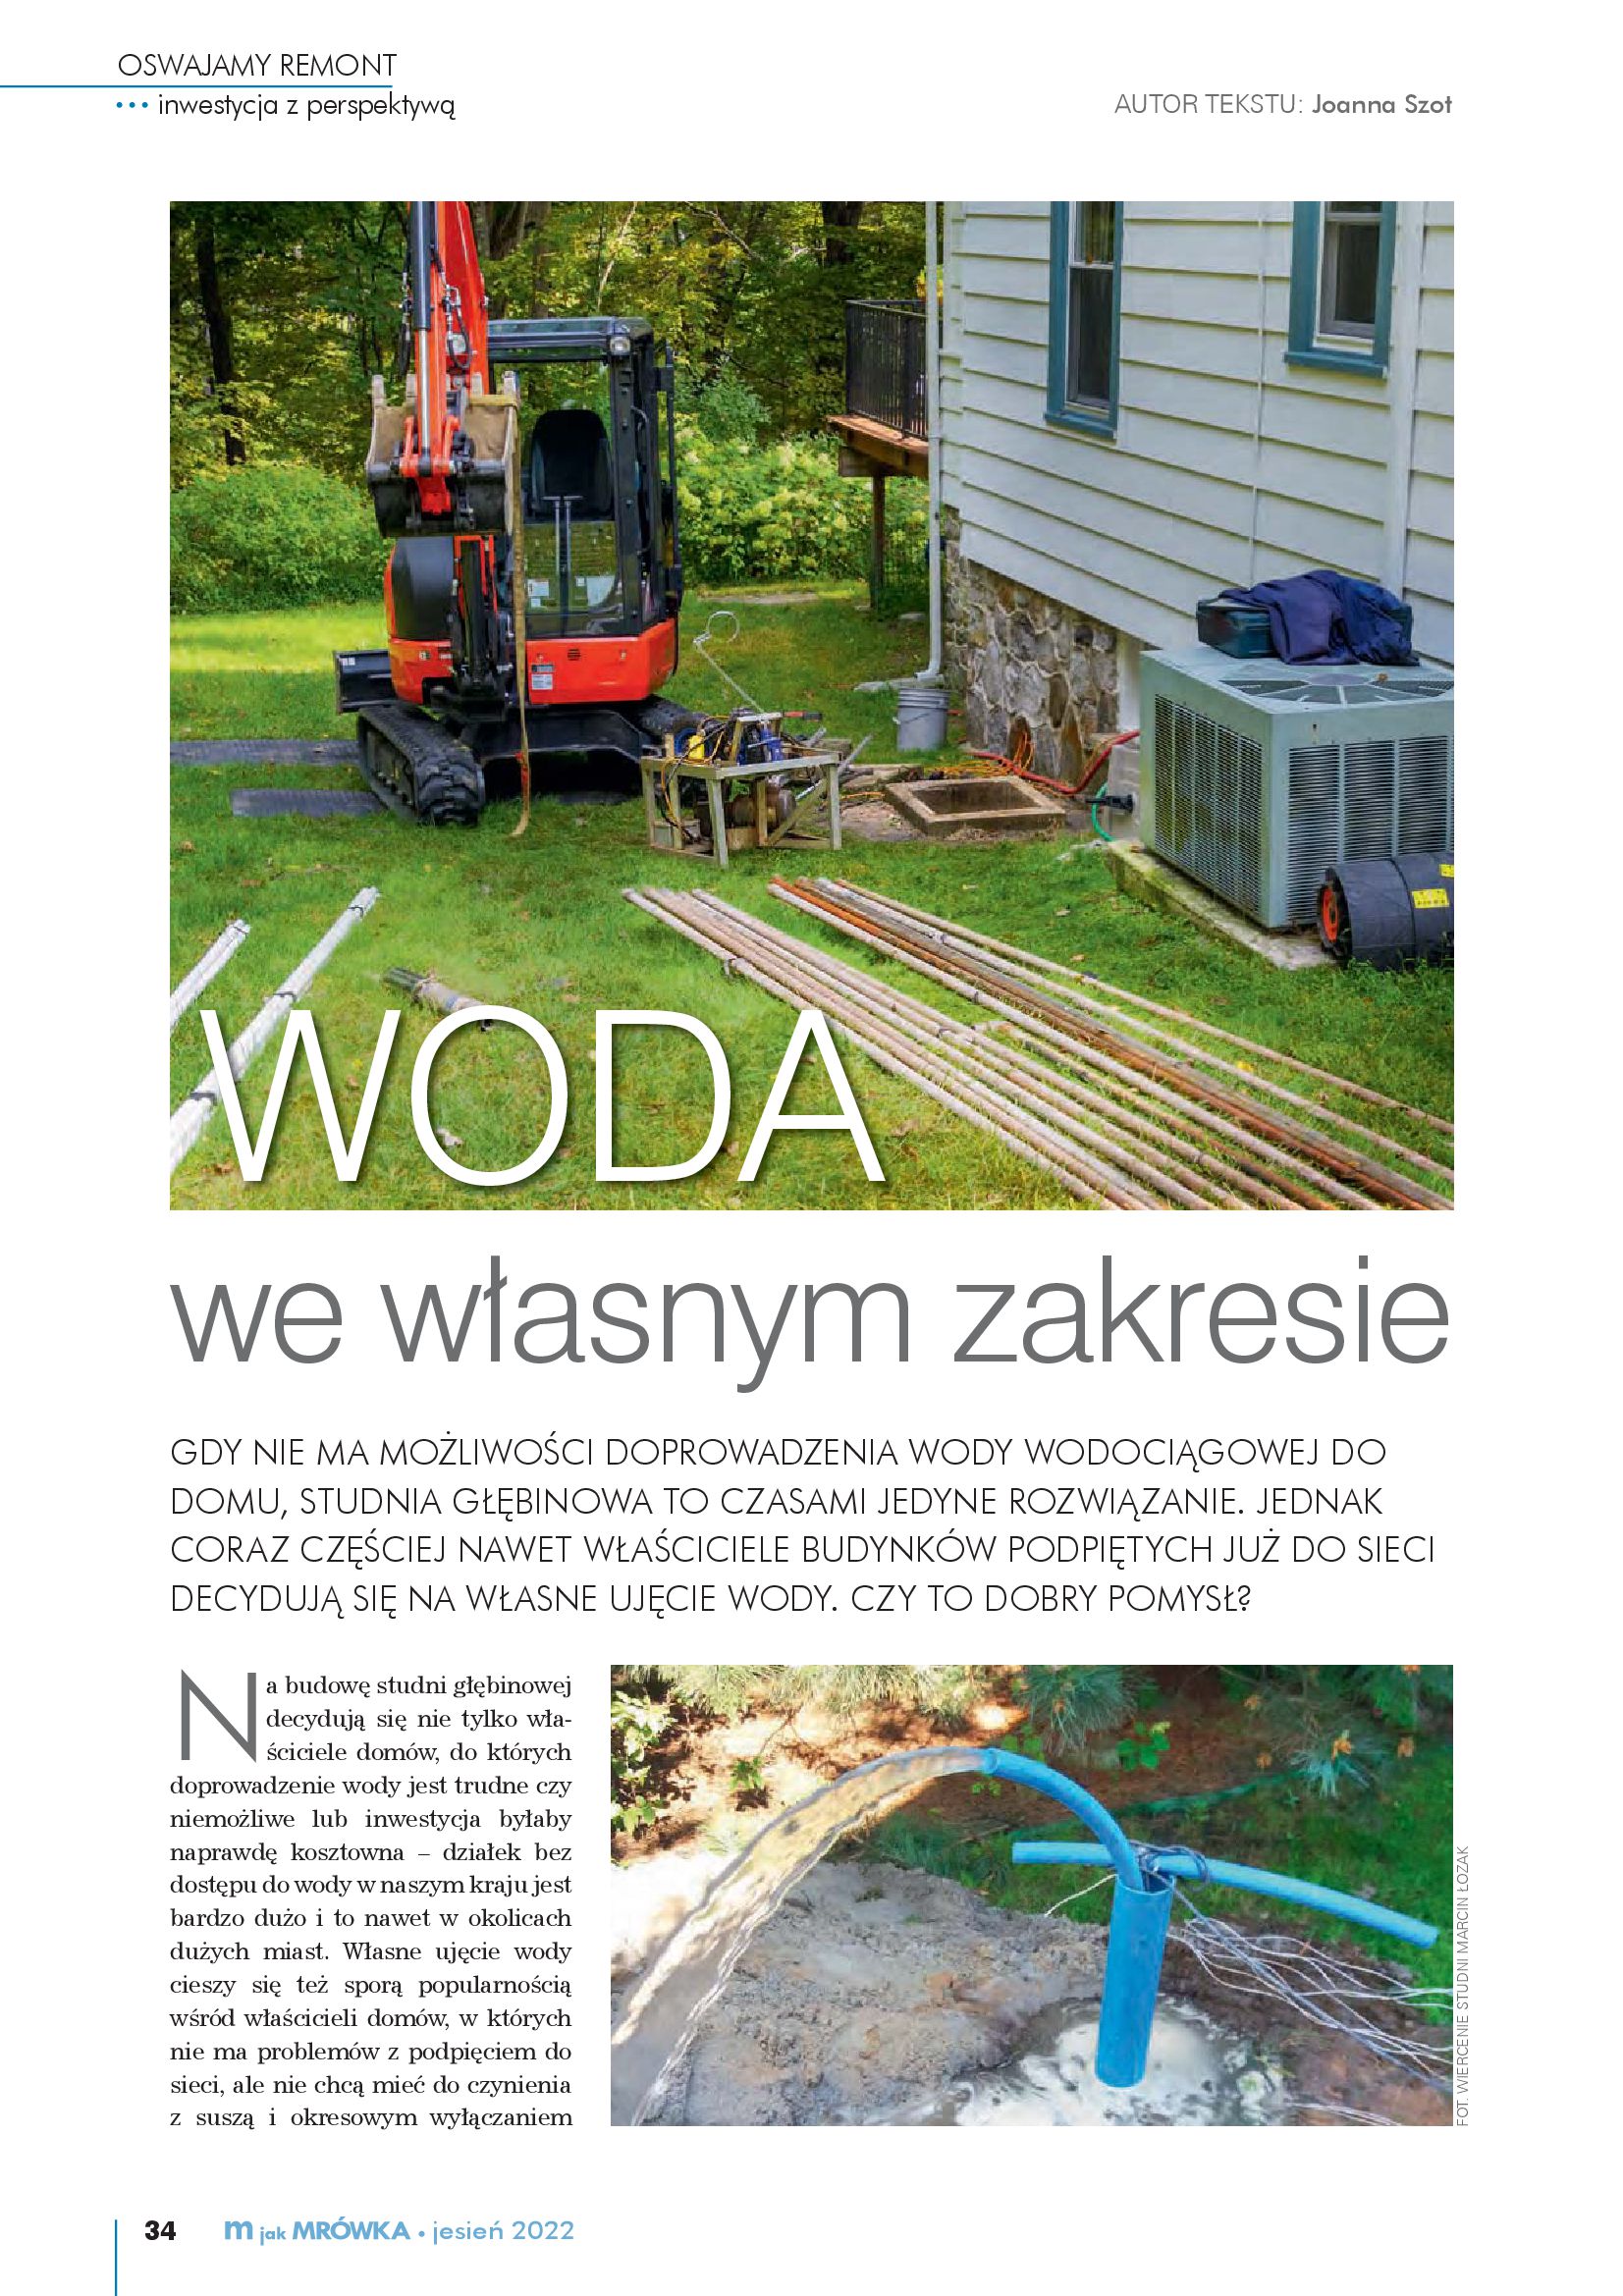 Gazetka PSB Mrówka: Katalog PSB Mrówka - Jesień 2022 2022-09-15 page-36